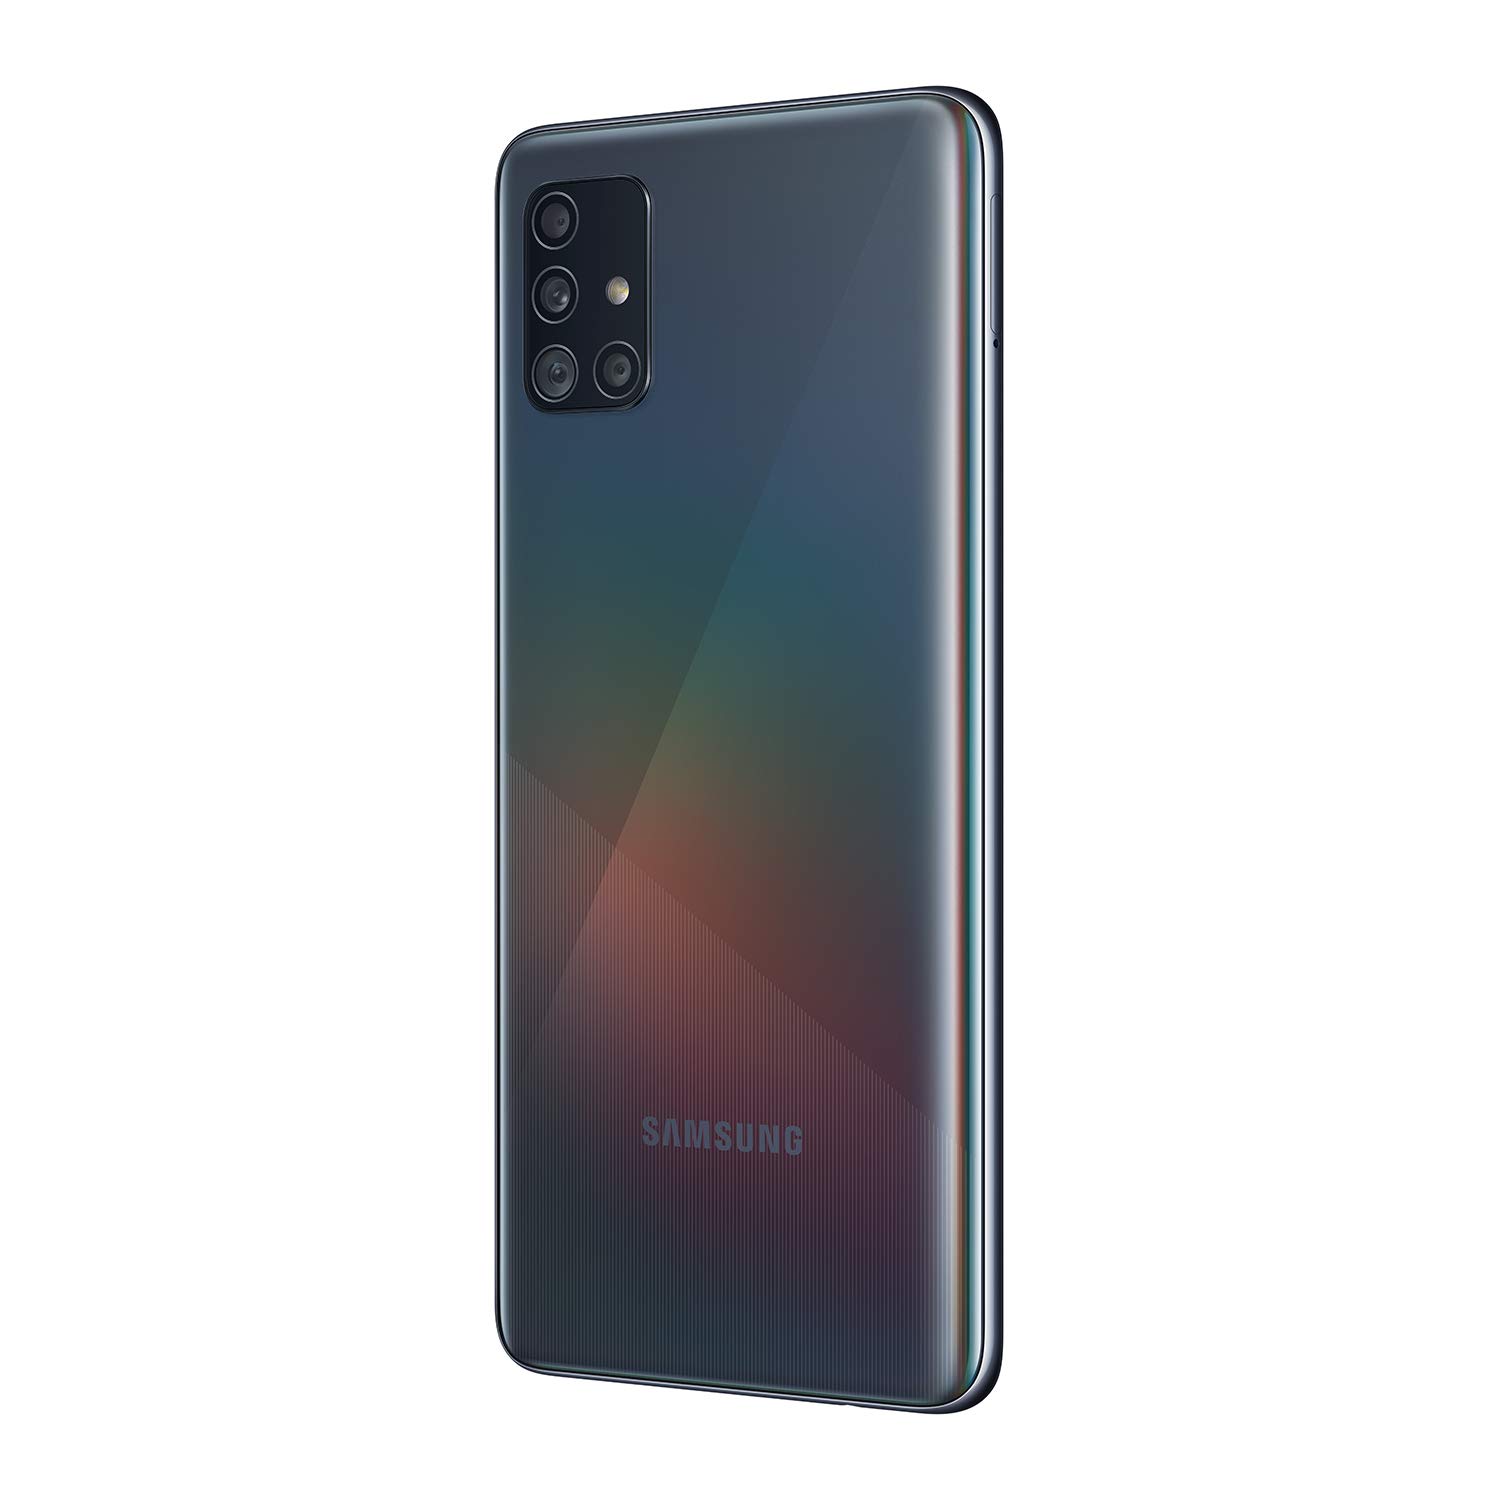 Samsung Galaxy A51 Factory Unlocked Cell Phone | 128GB of Storage | Long Lasting Battery | Single SIM | GSM or CDMA Compatible | US Version | Black